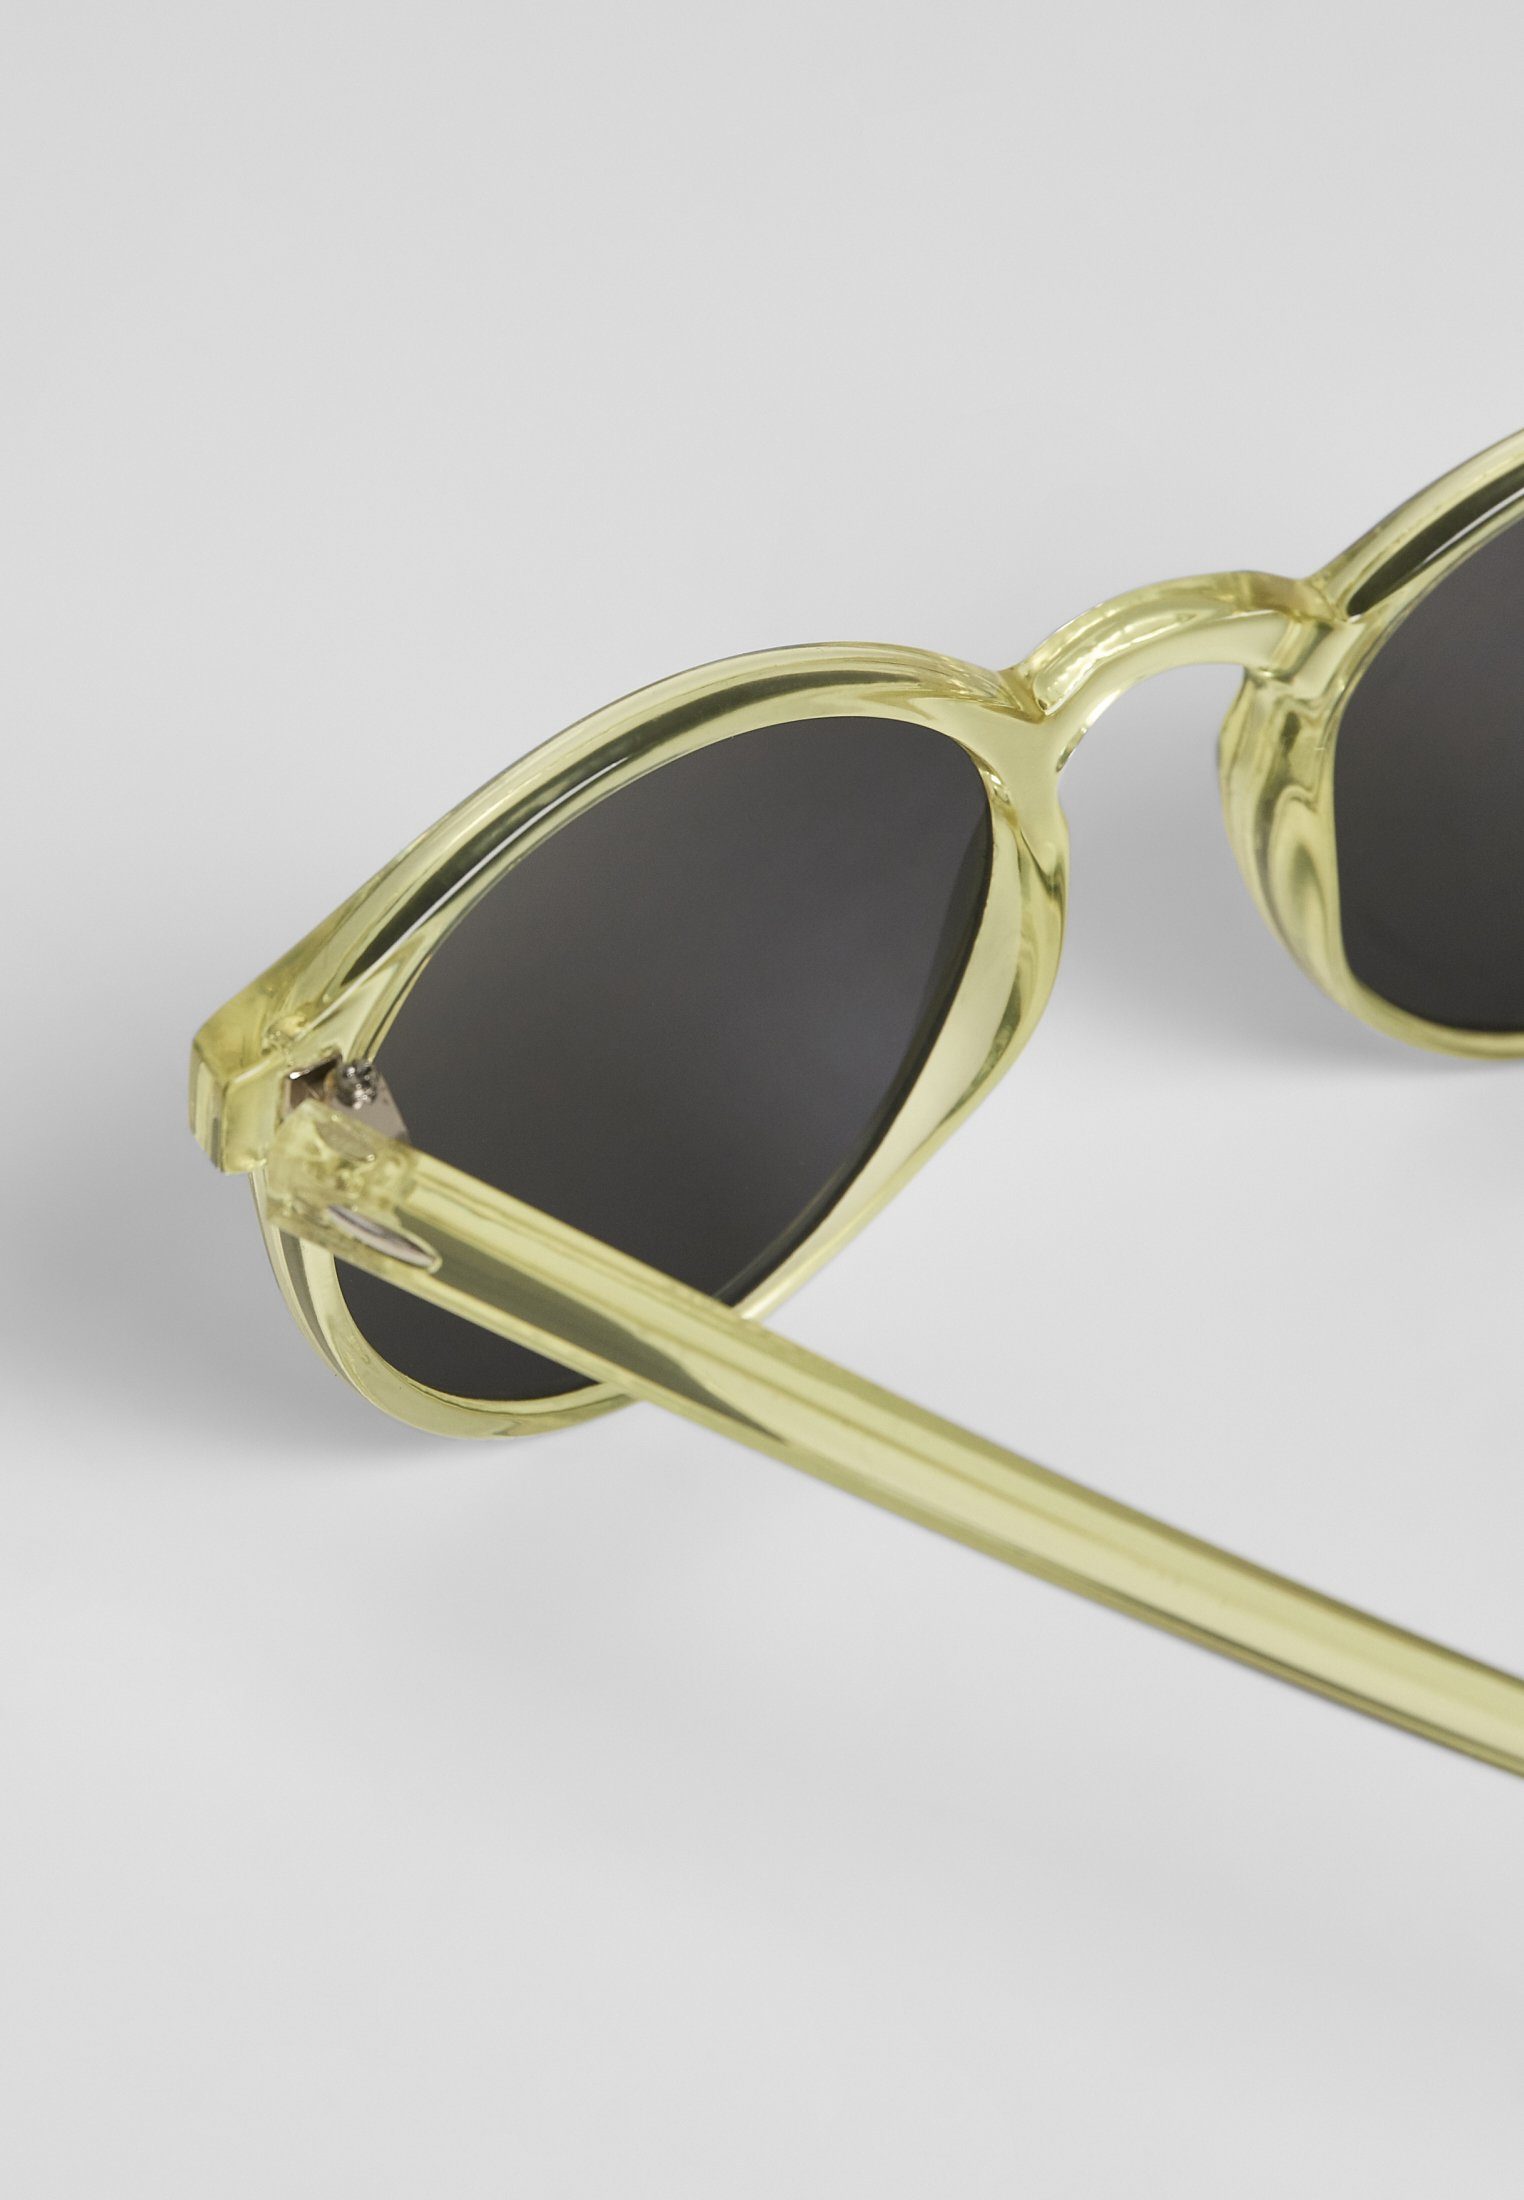 URBAN CLASSICS Sonnenbrille Unisex Sunglasses Cypress black/lightgrey/yellow 3-Pack